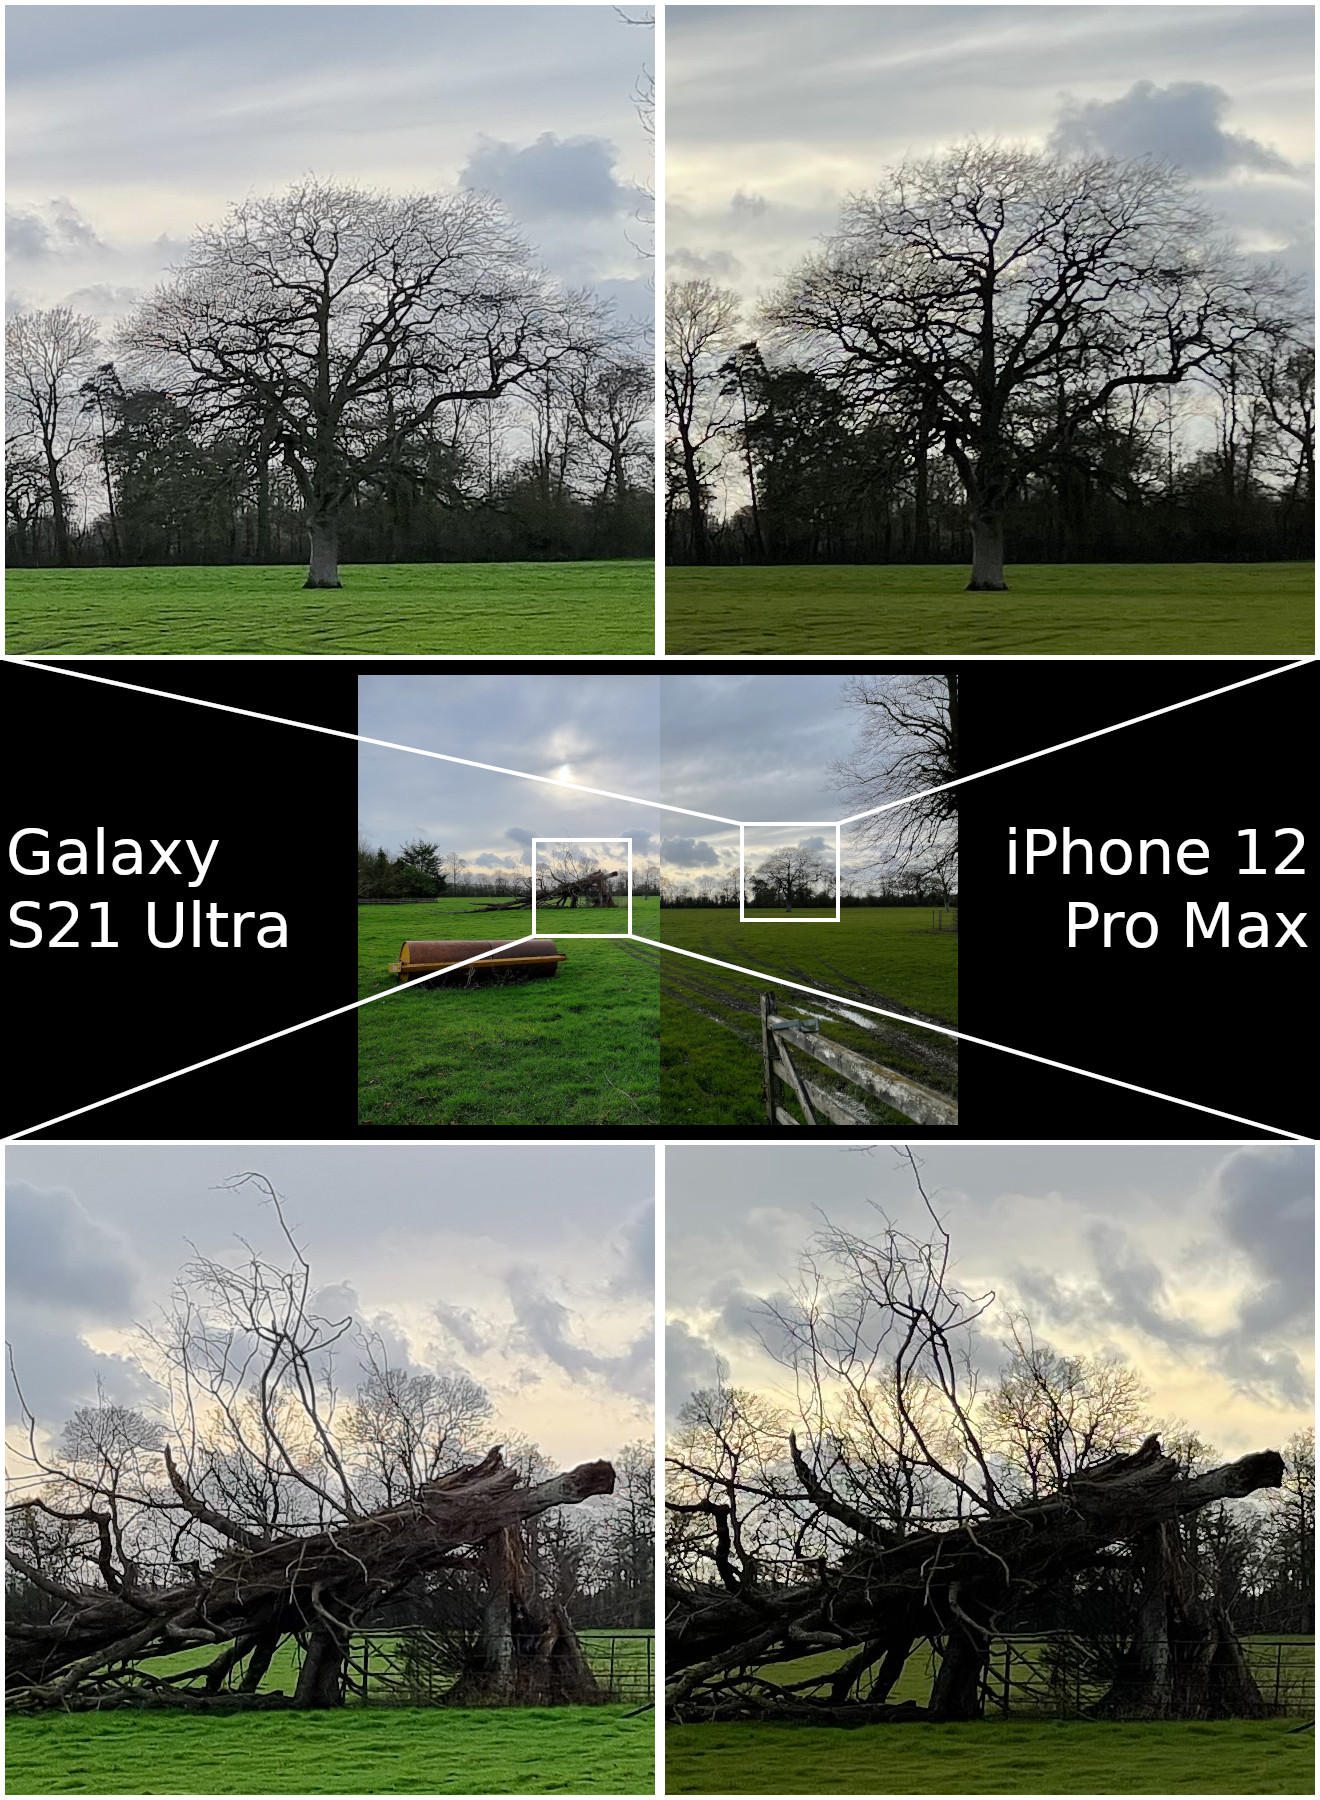 HDR Samsung Galaxy S21 Ultra vs Apple iPhone 12 Pro Max